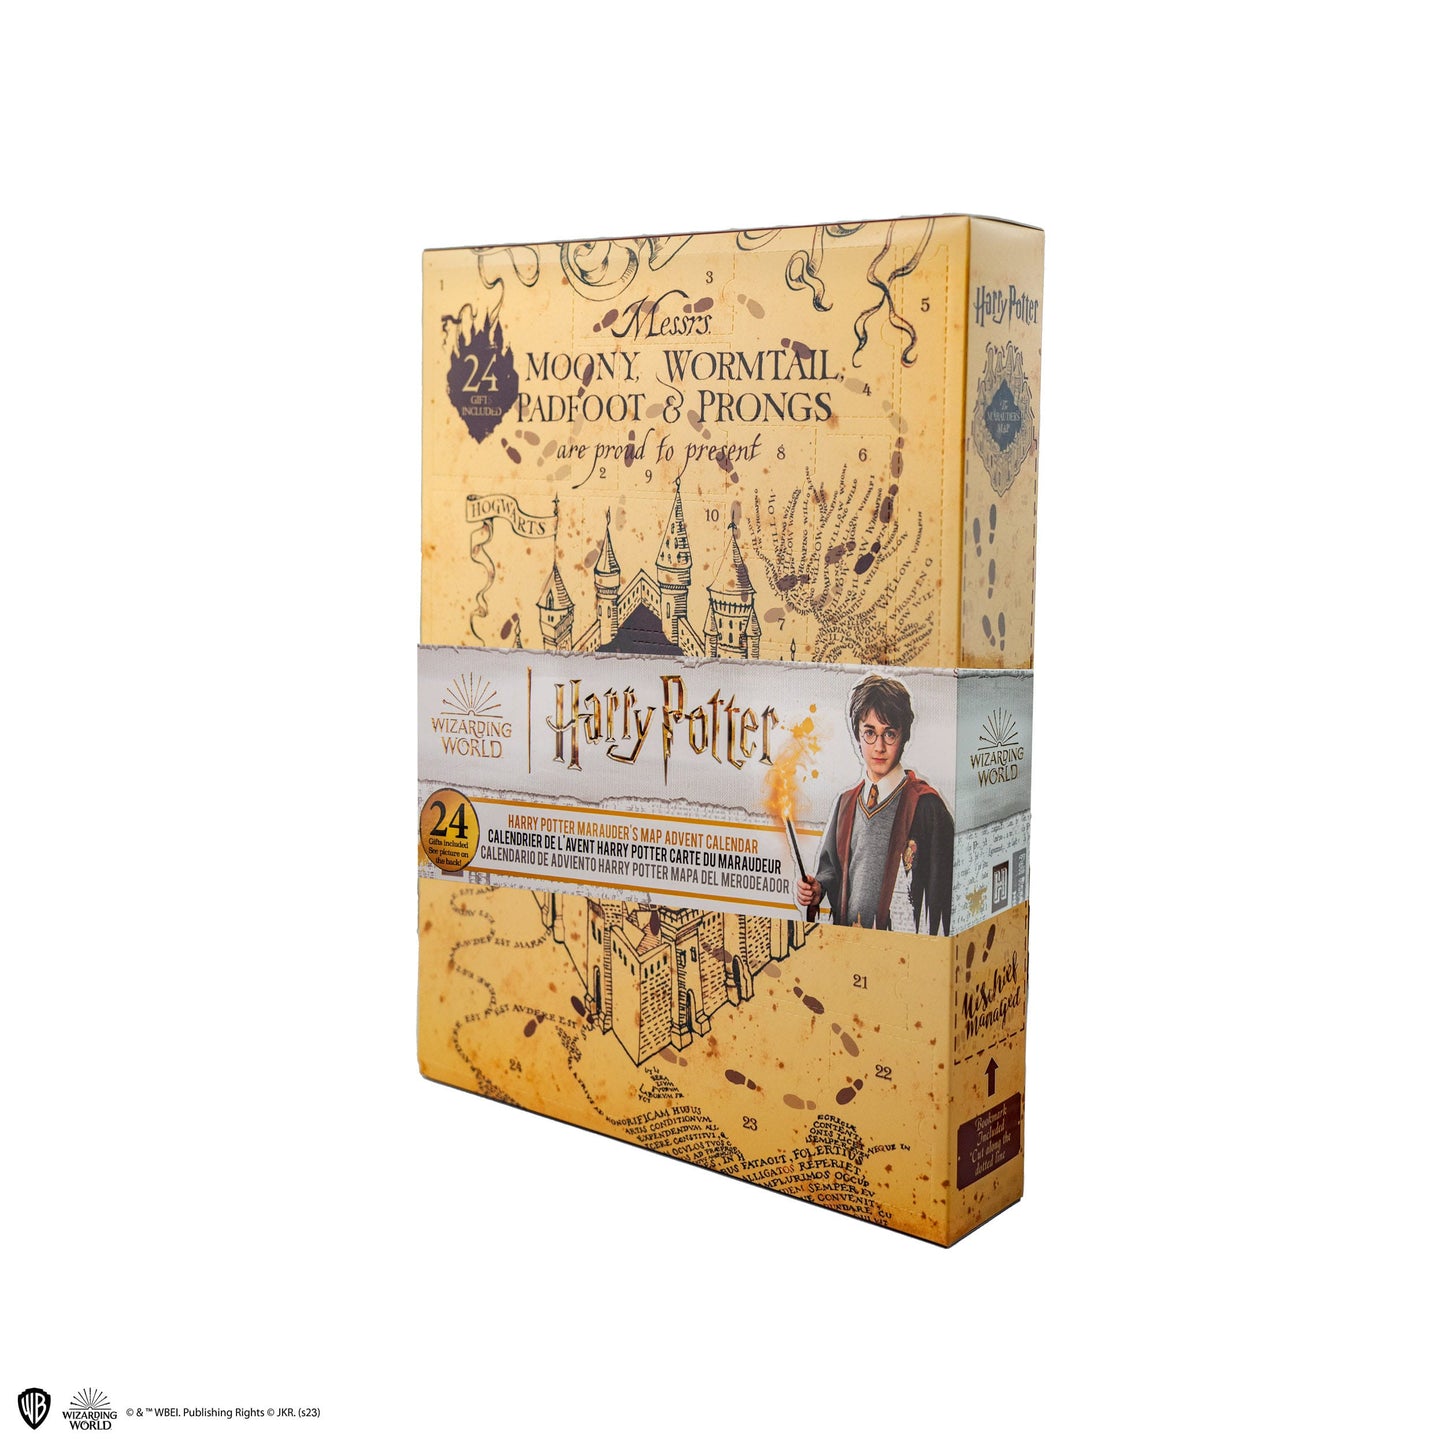 Adventný kalendár Harry Potter - Marauderova karta